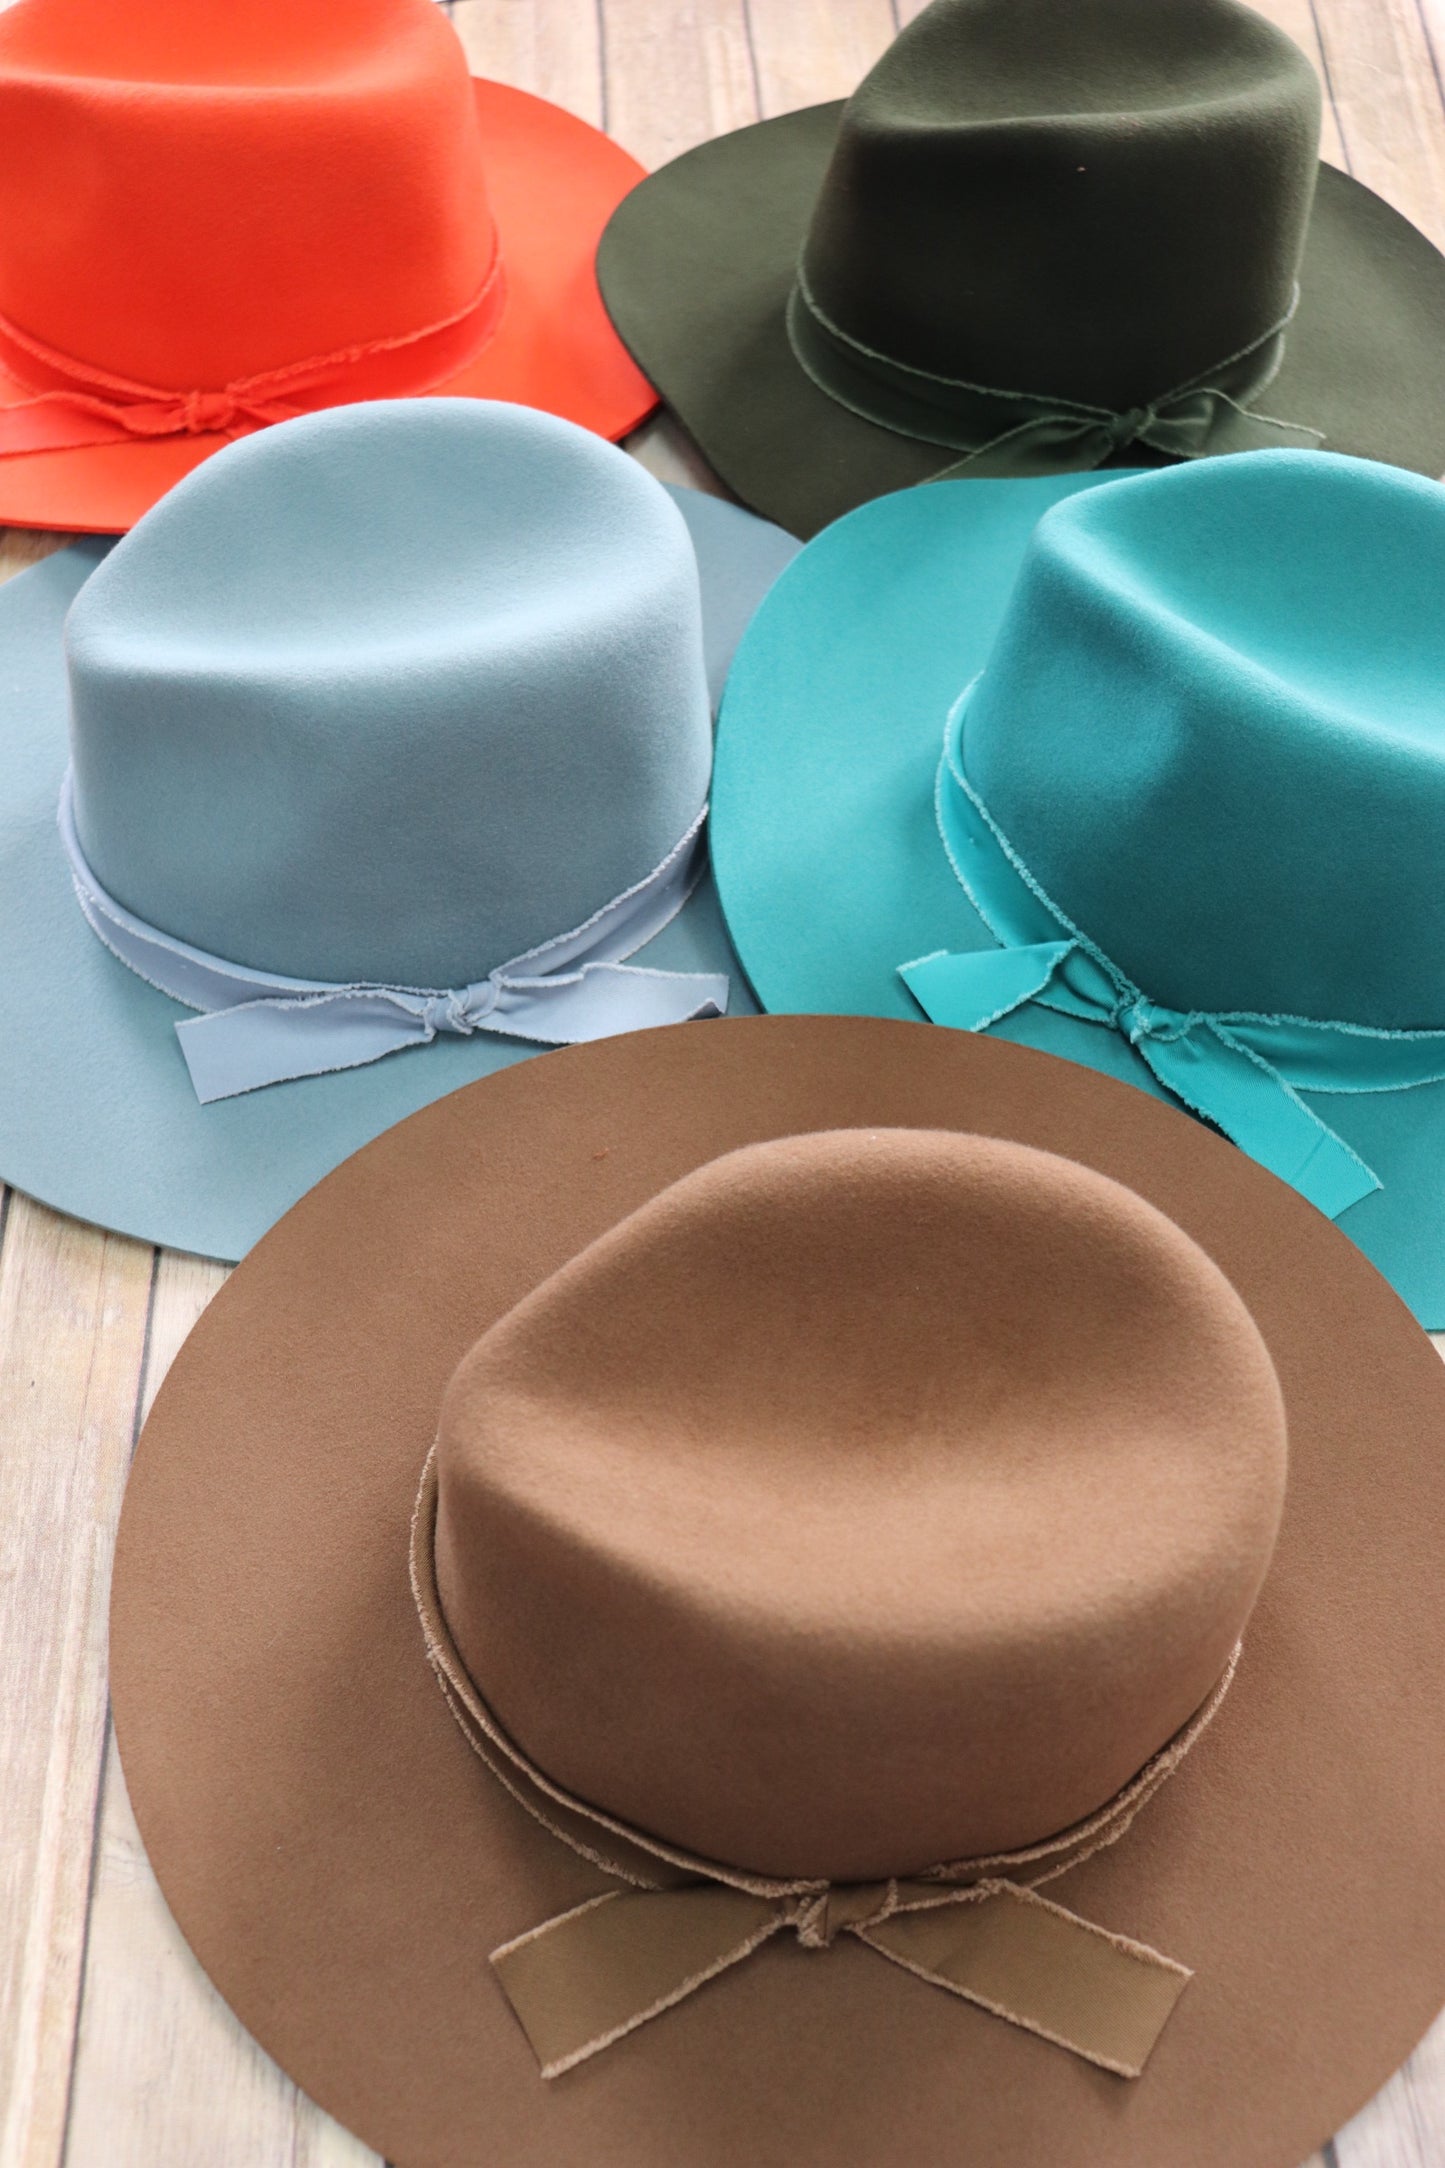 Presidio Panama Wool Hat [14 Colors]